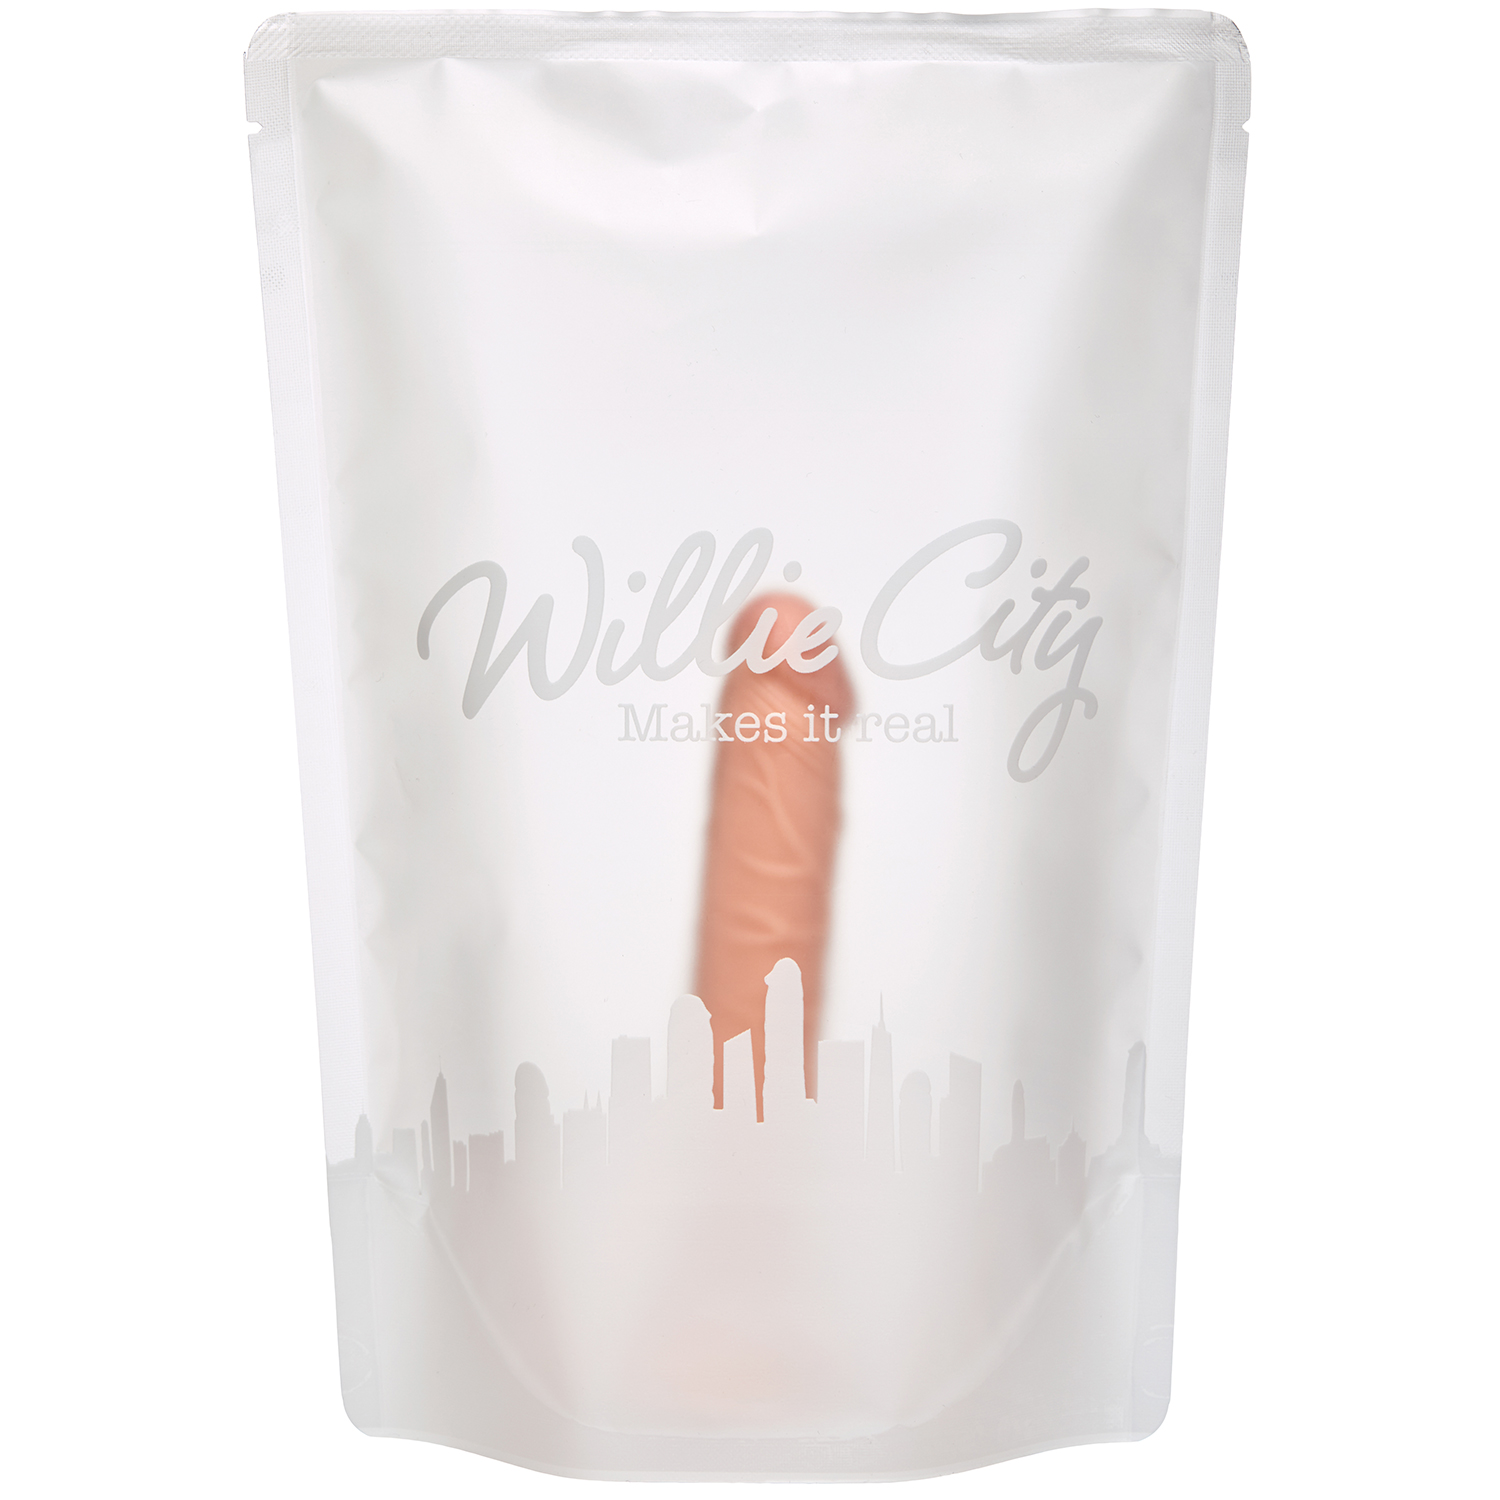 Willie City Realistisk Dildo med Sugekop 14,5 cm    - Nude thumbnail